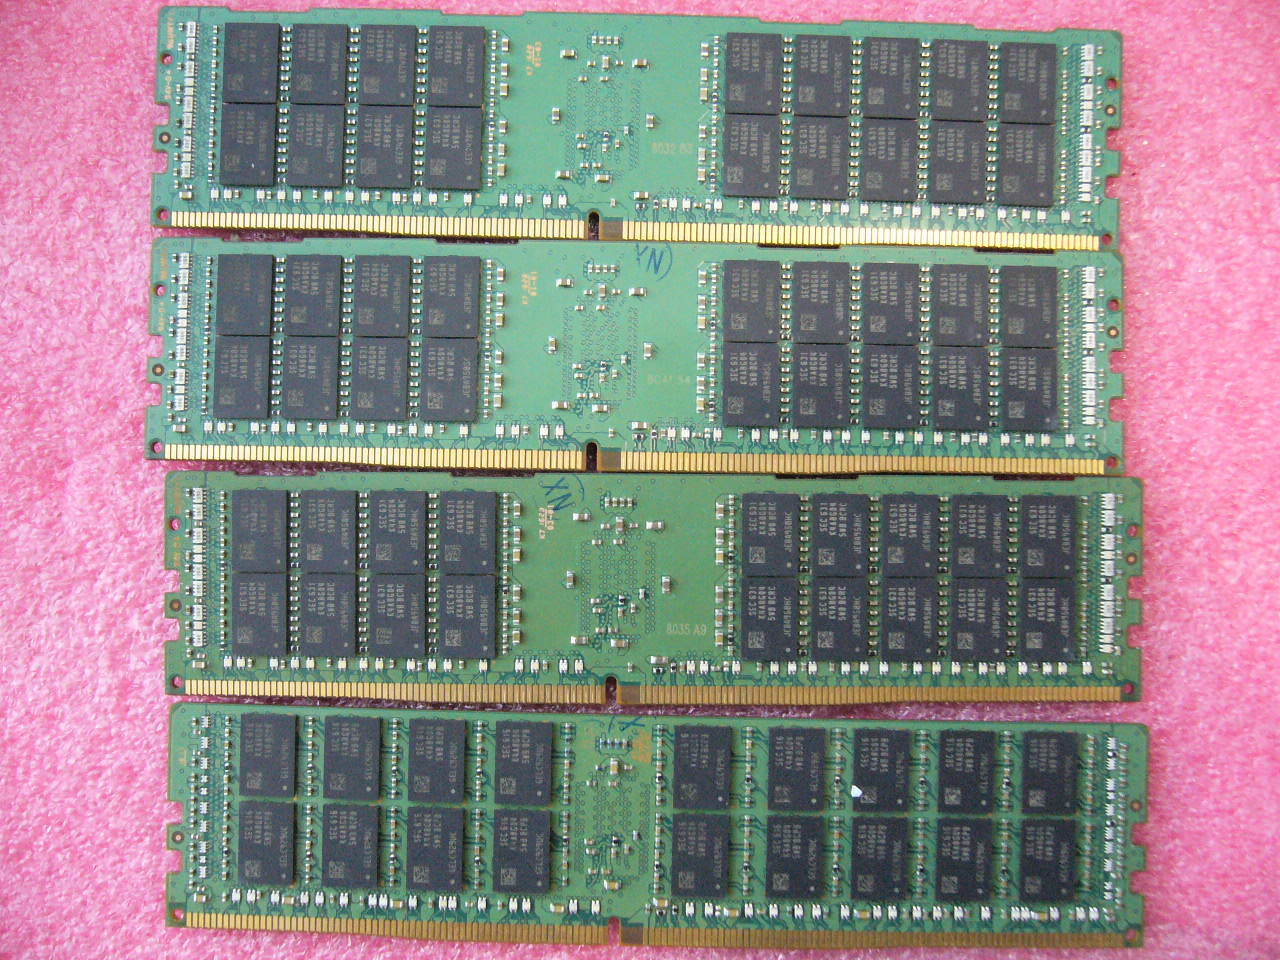 QTY 1x 32GB DDR4 2Rx4 PC4-2400T-RA1 ECC Registered memory Samsung M393A4K40BB1 - Click Image to Close